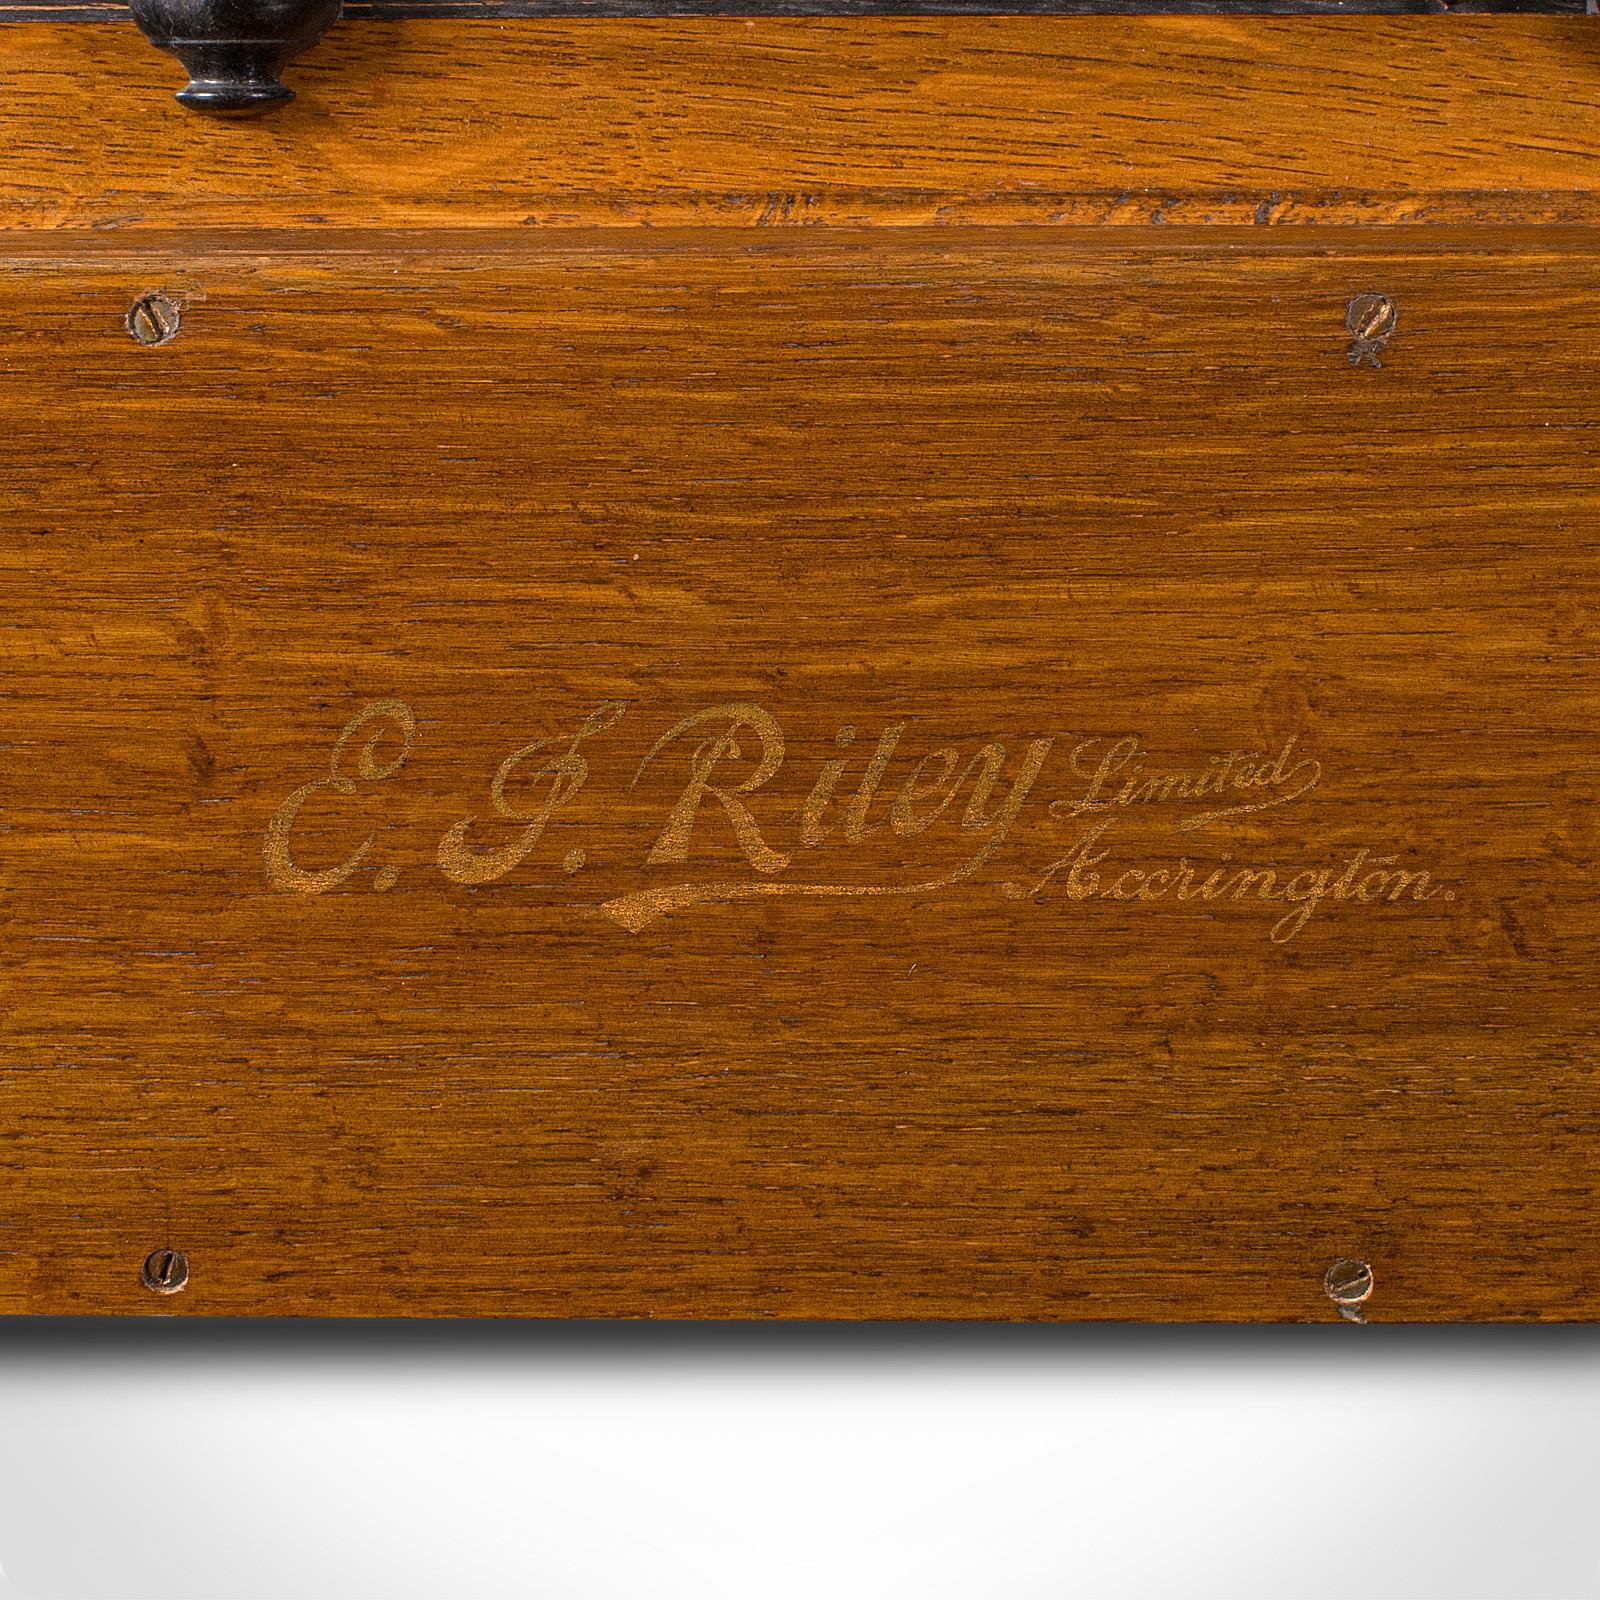 Antique Billiards Scoreboard, English, Oak, 2 Player, Decorative Snooker Marker 5